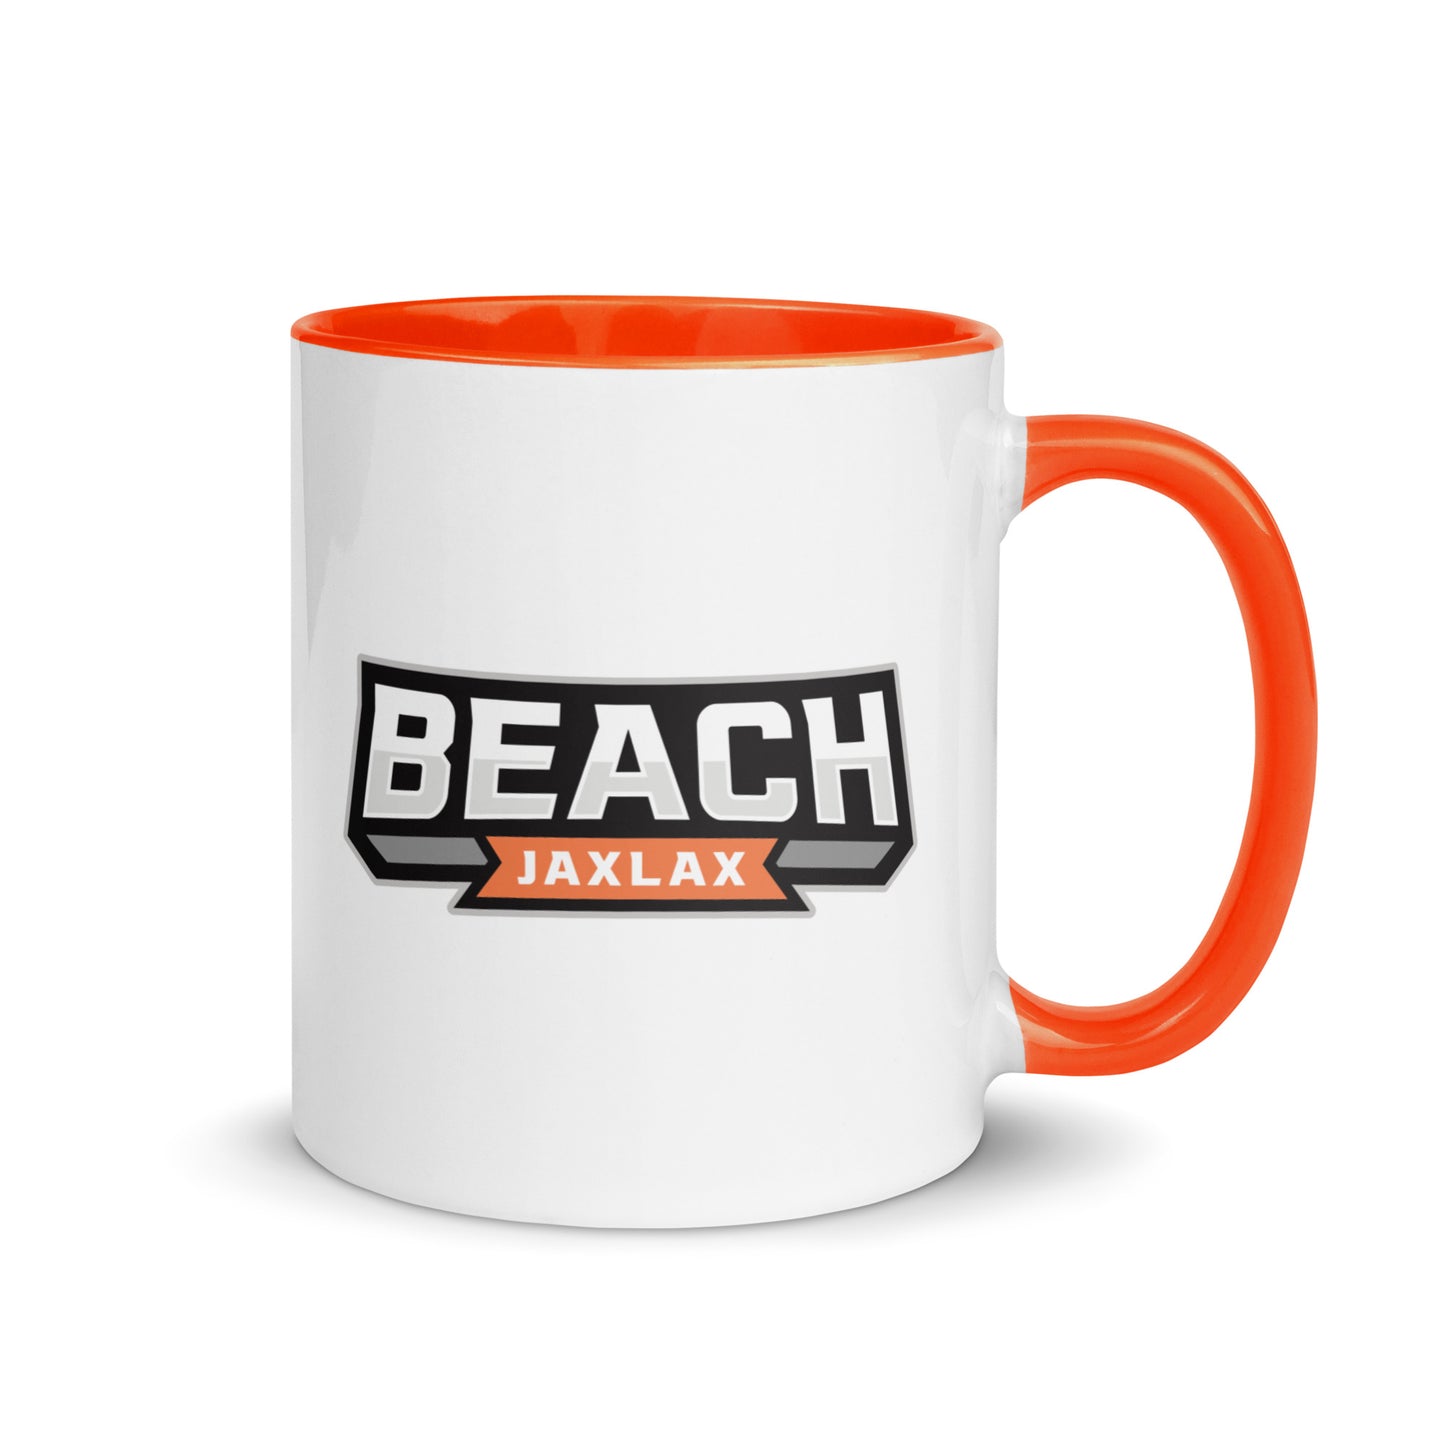 Jax Lax Beach - Mug with Color Inside